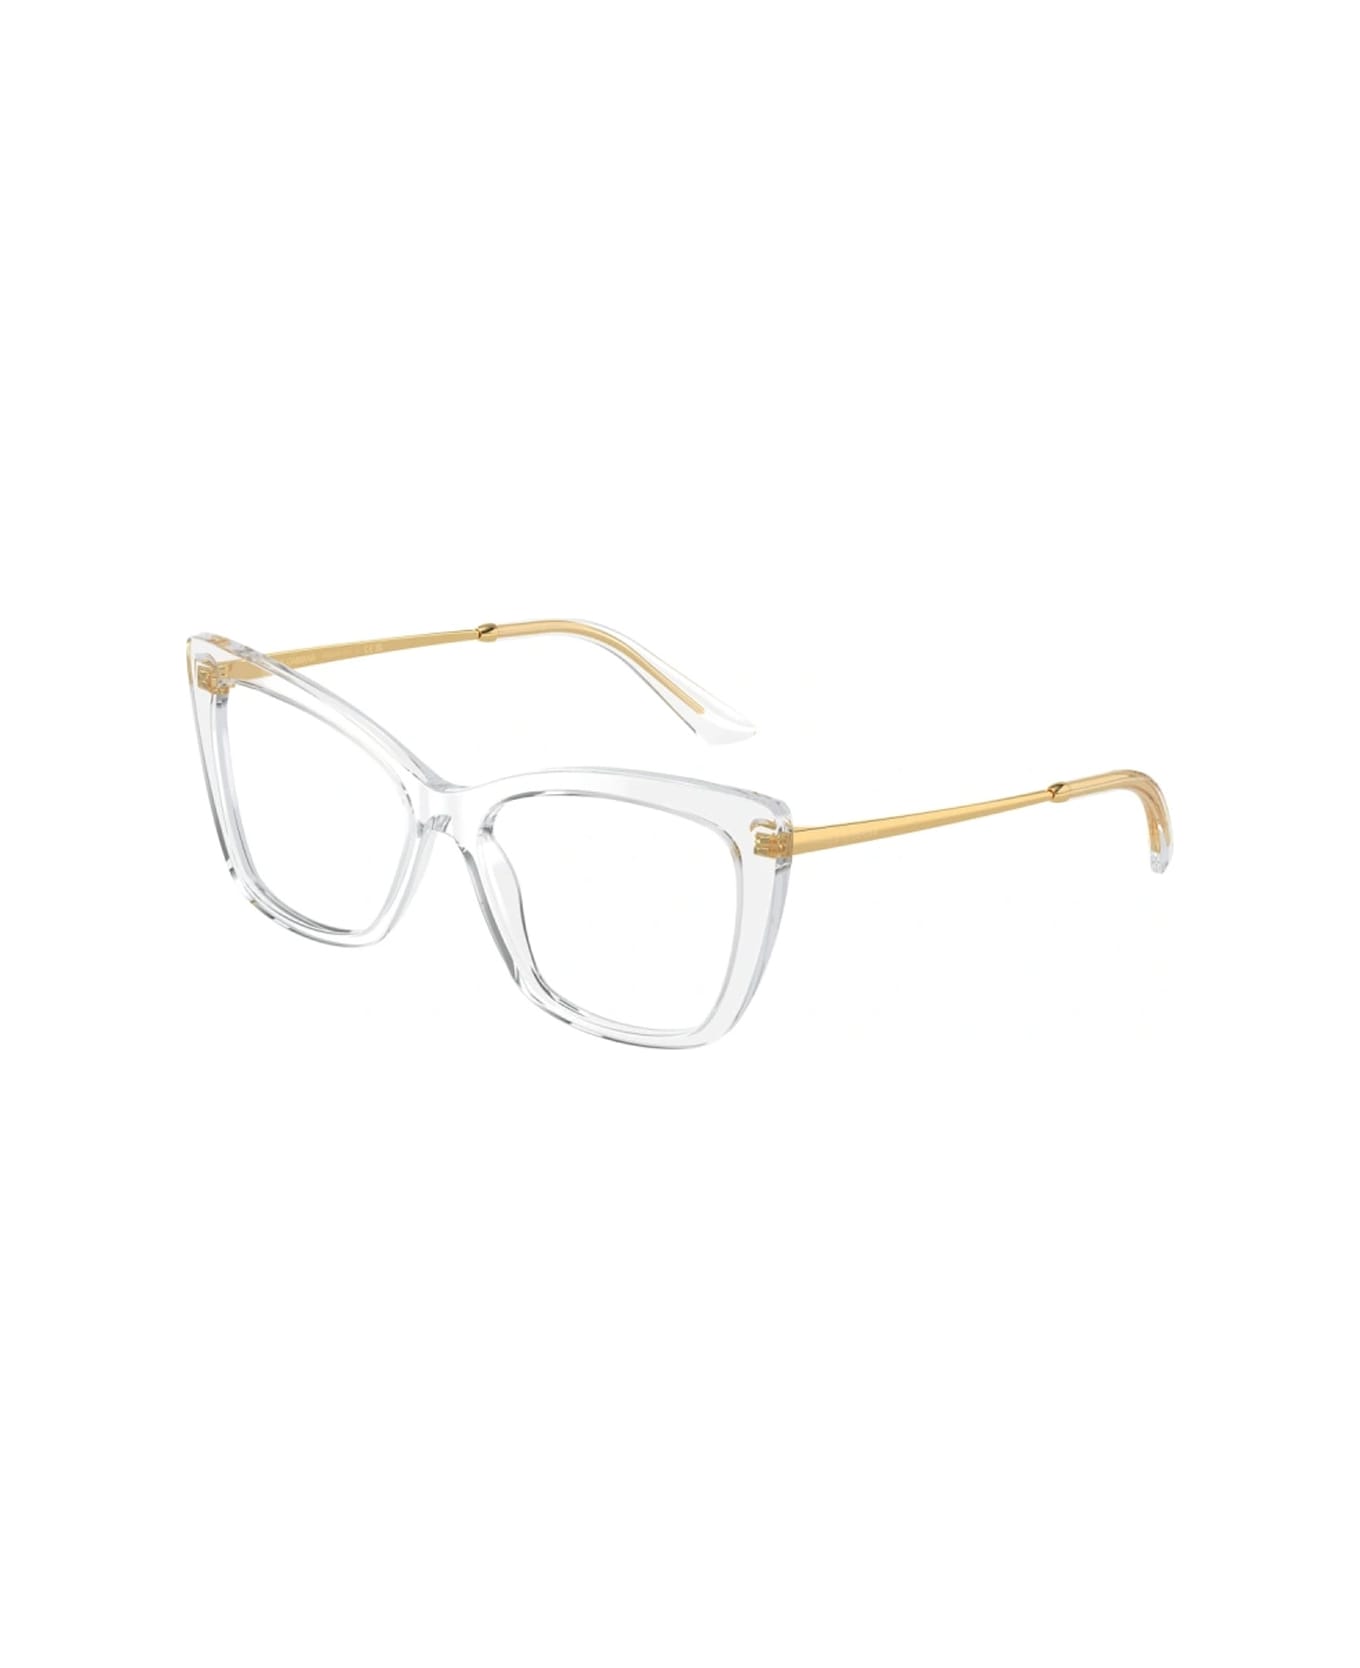 Dolce woman & Gabbana Pre-Owned stretch mini dress Eyewear Dg3348 3133 Glasses - Trasparente